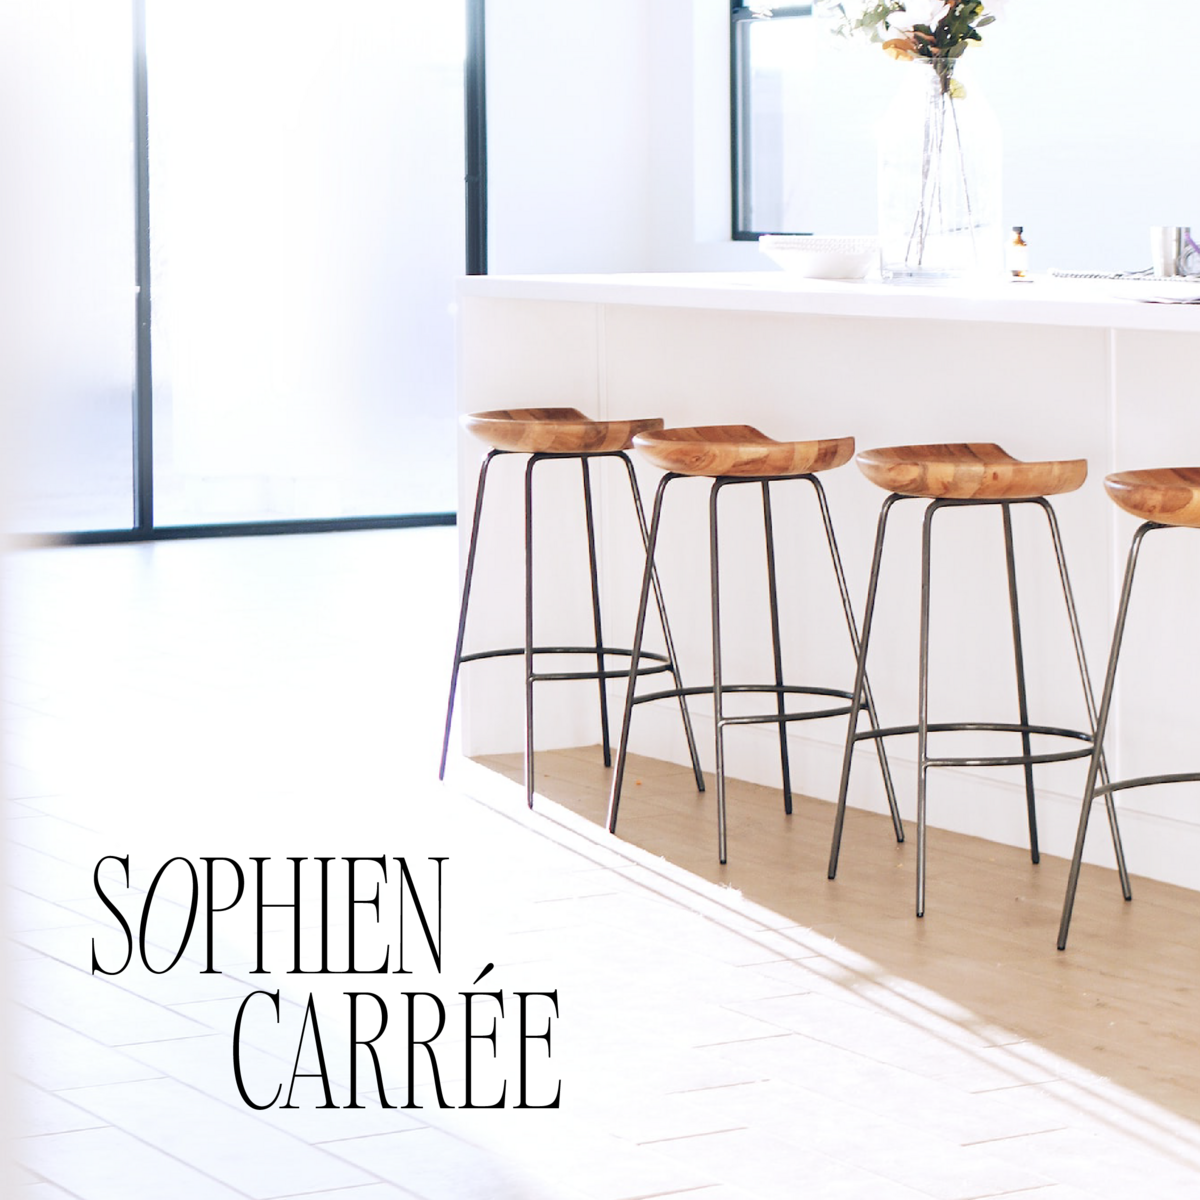 Sophien Carree Brand Identity-04